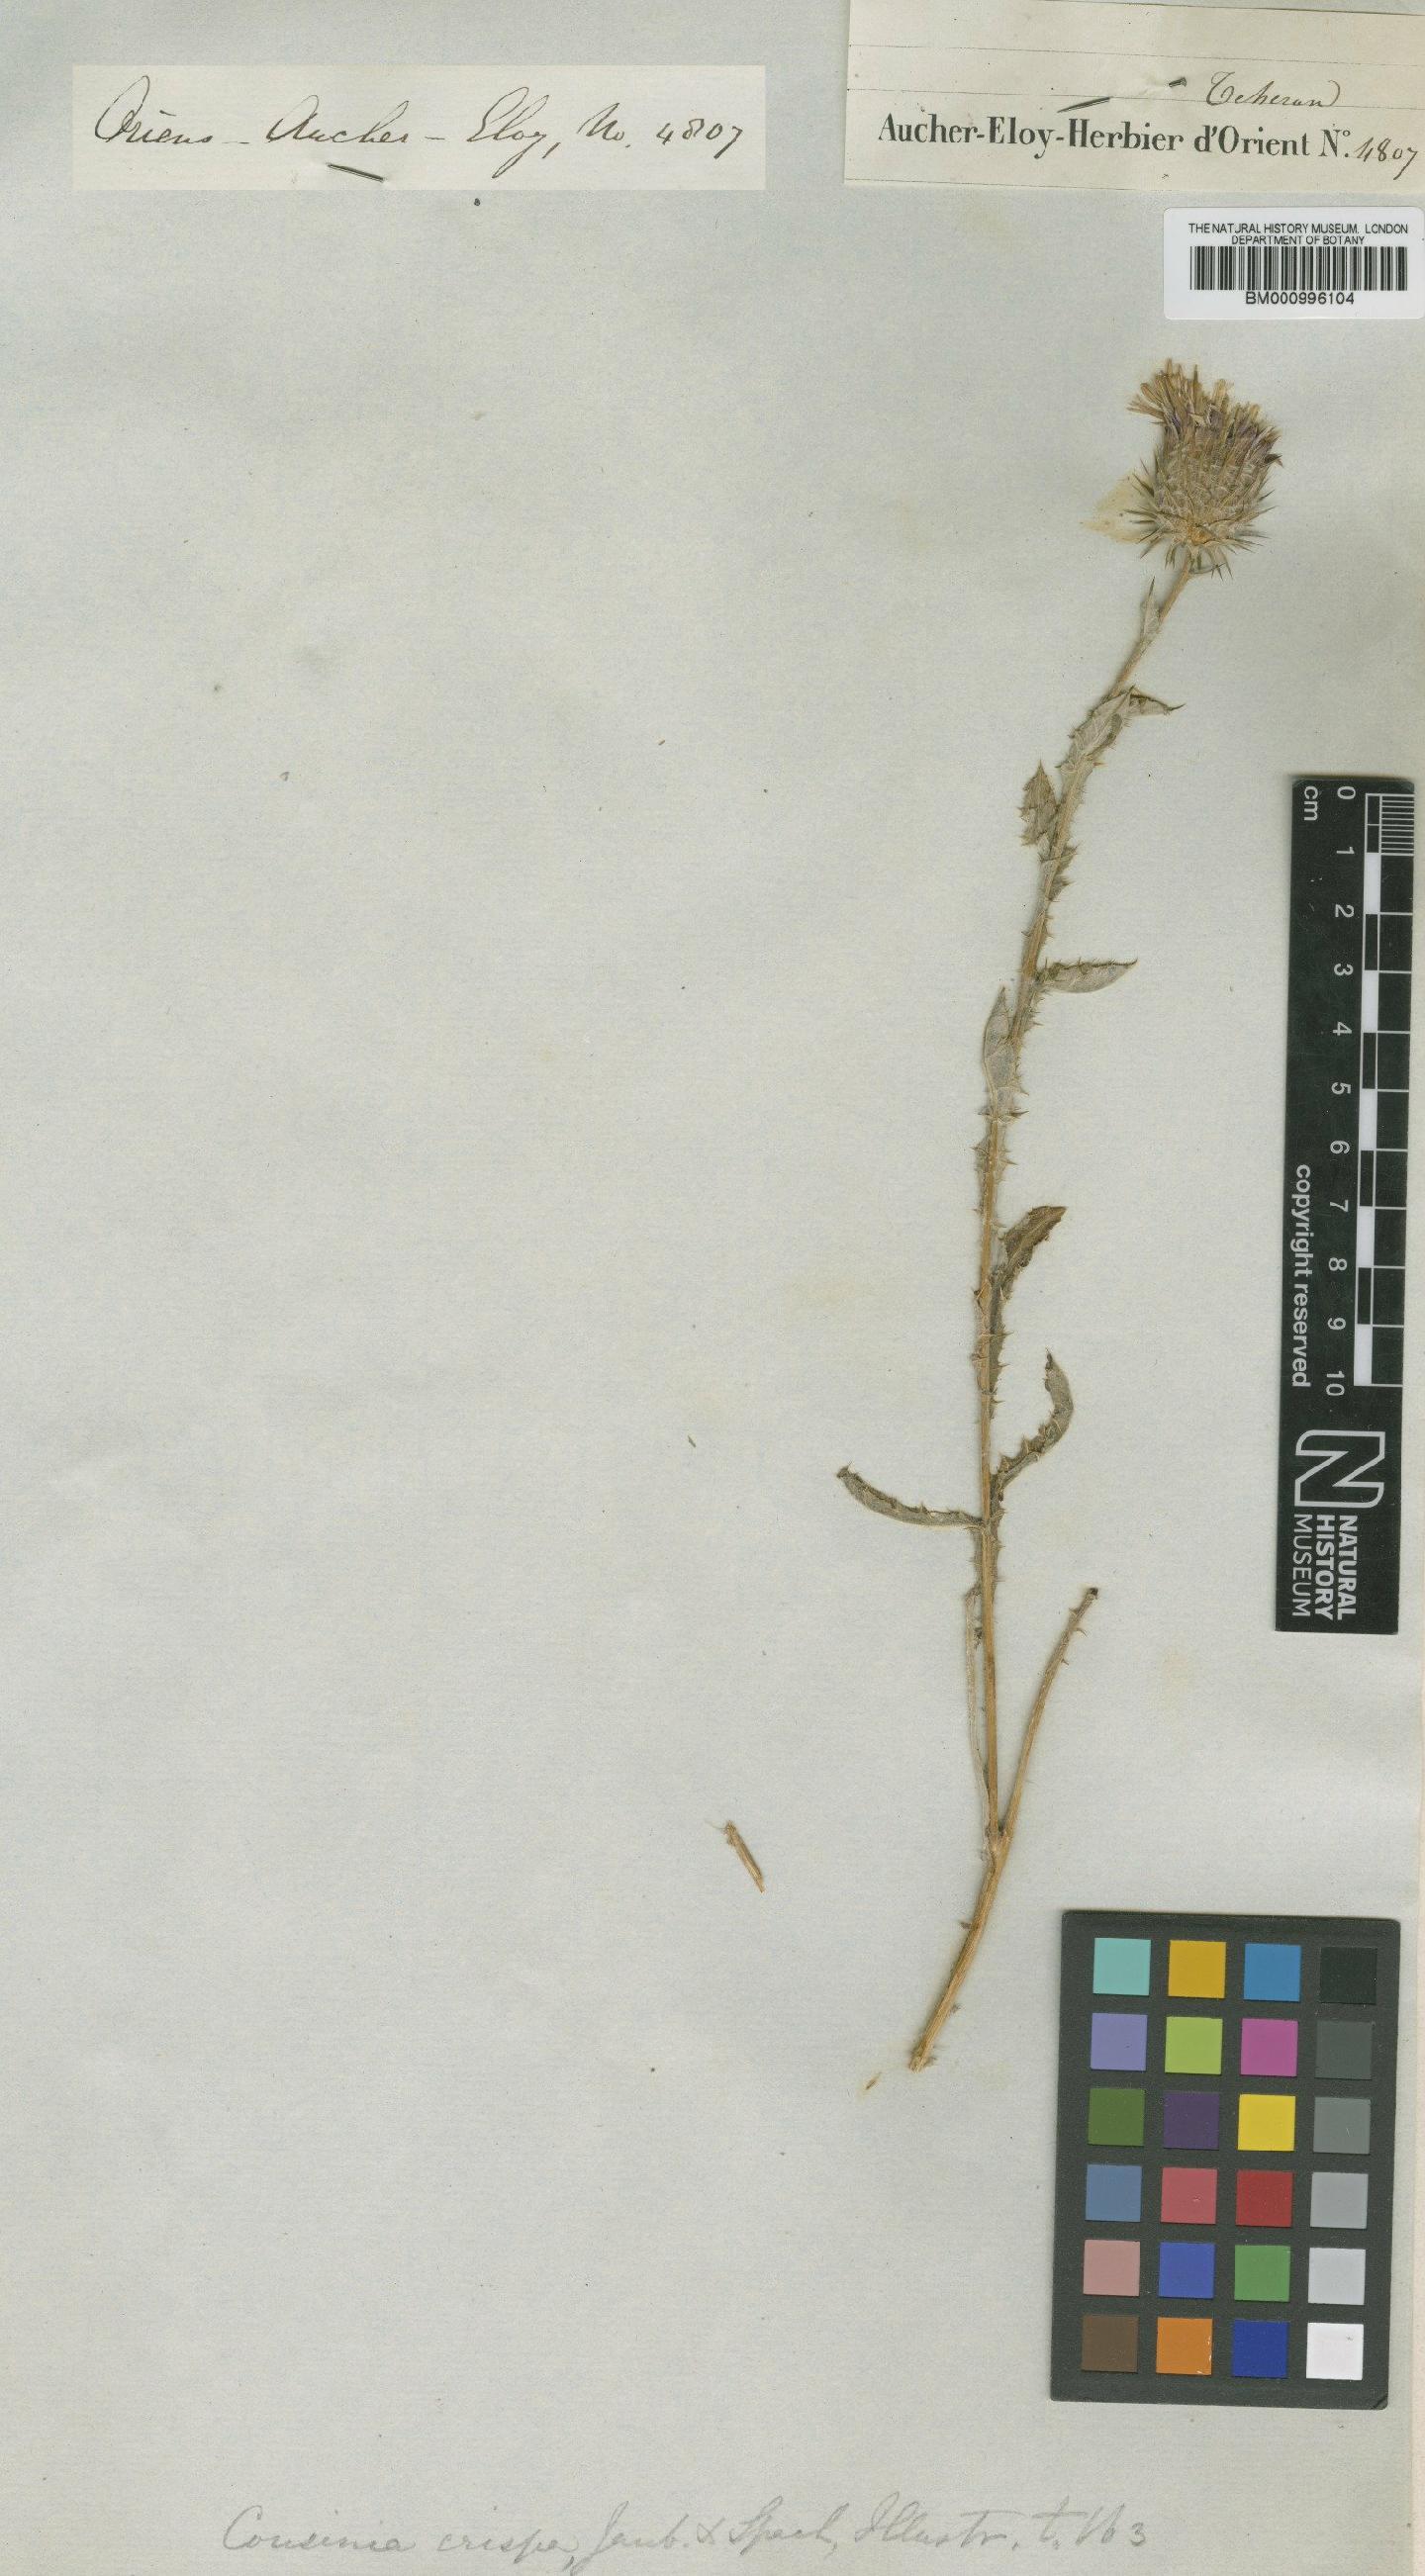 To NHMUK collection (Cousinia crispa Jaub. & Spach; Type; NHMUK:ecatalogue:475691)